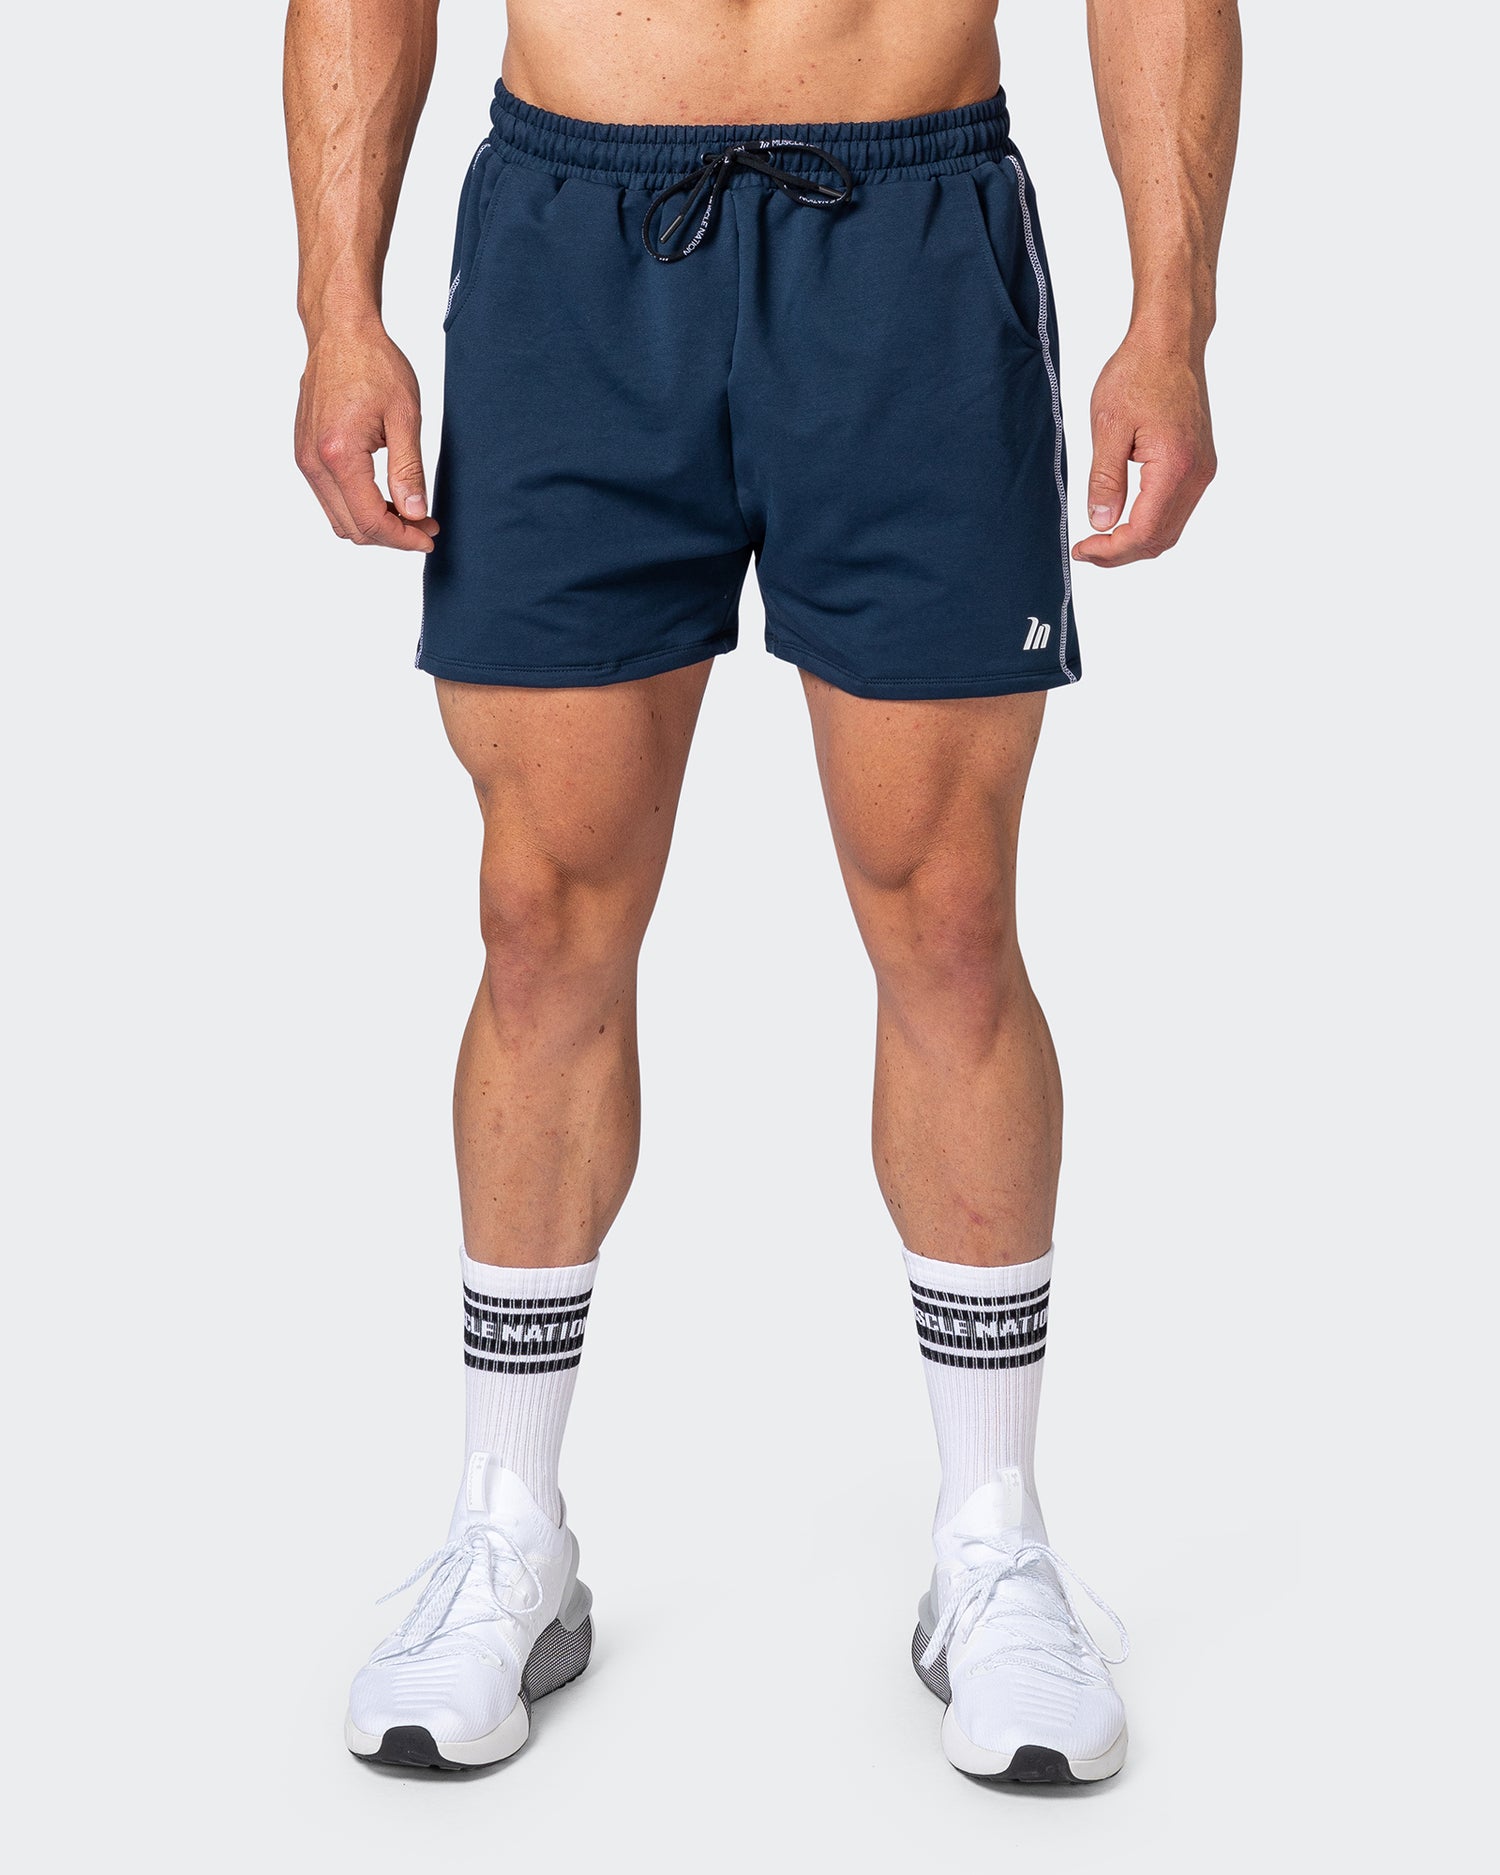 Classic Squat Shorts - Sapphire